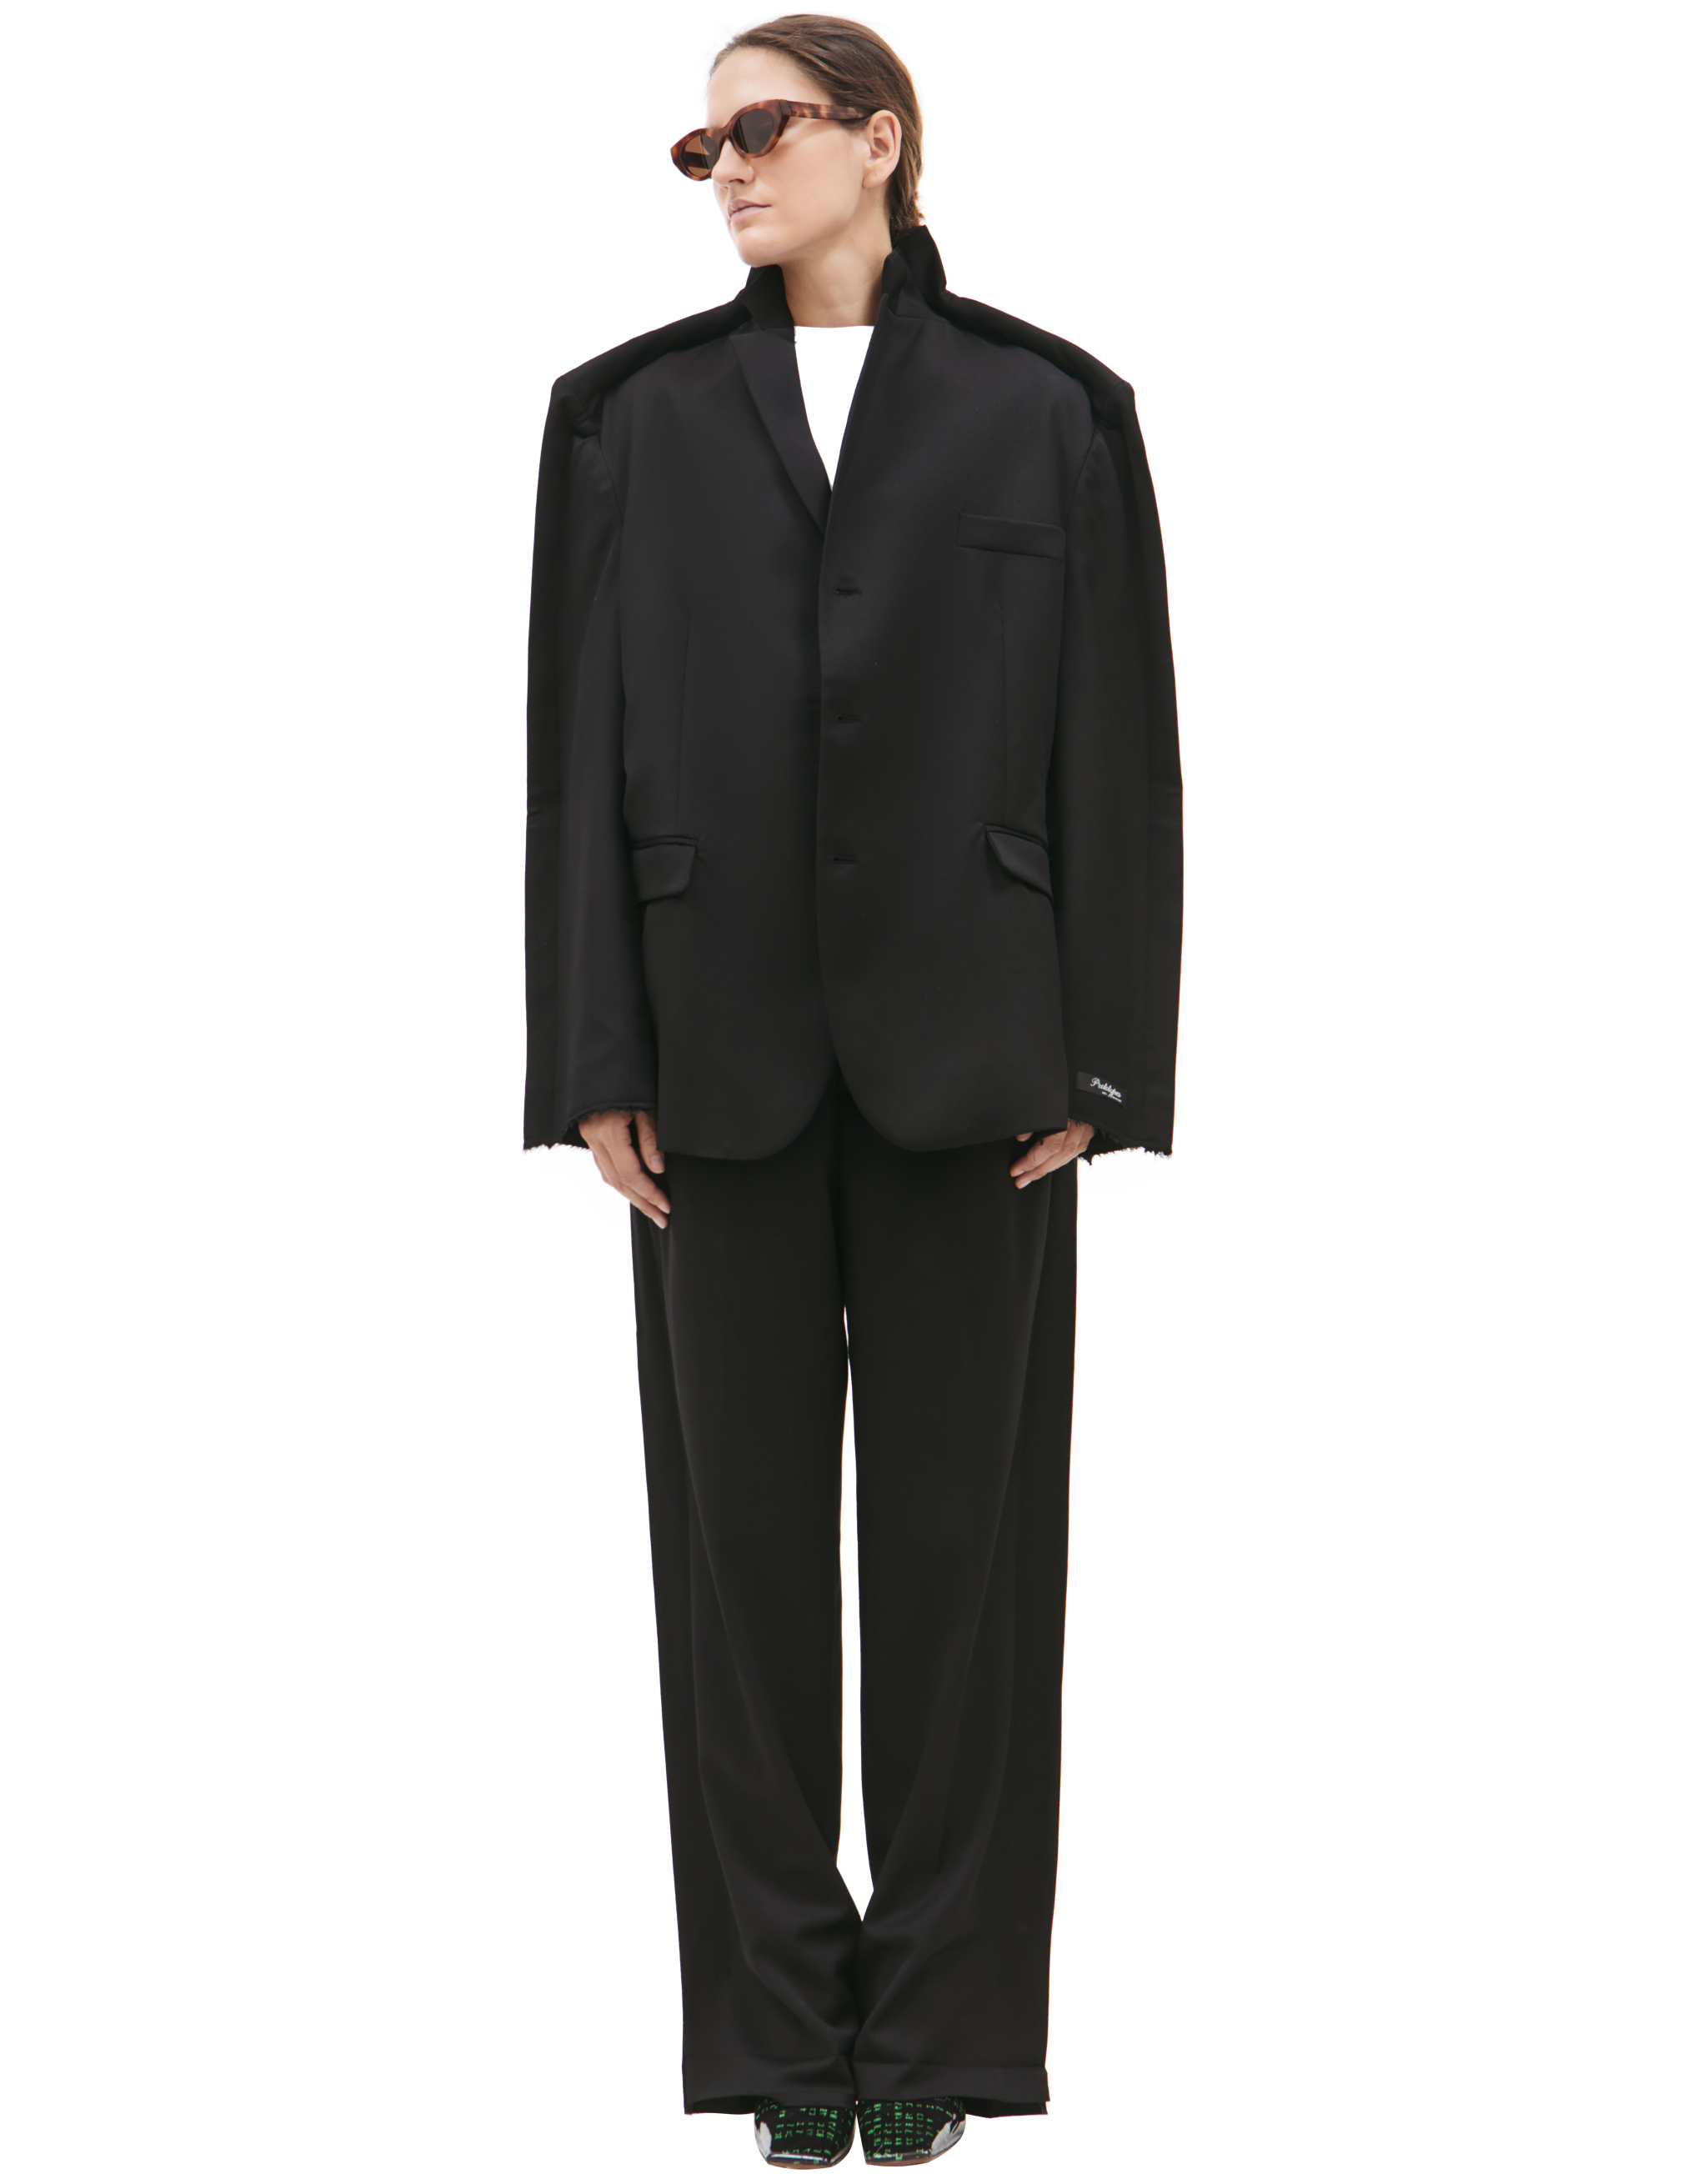 Оверсайз пиджак с рваными краями PROTOTYPES PT05TJA07US, размер S/M;L/XL